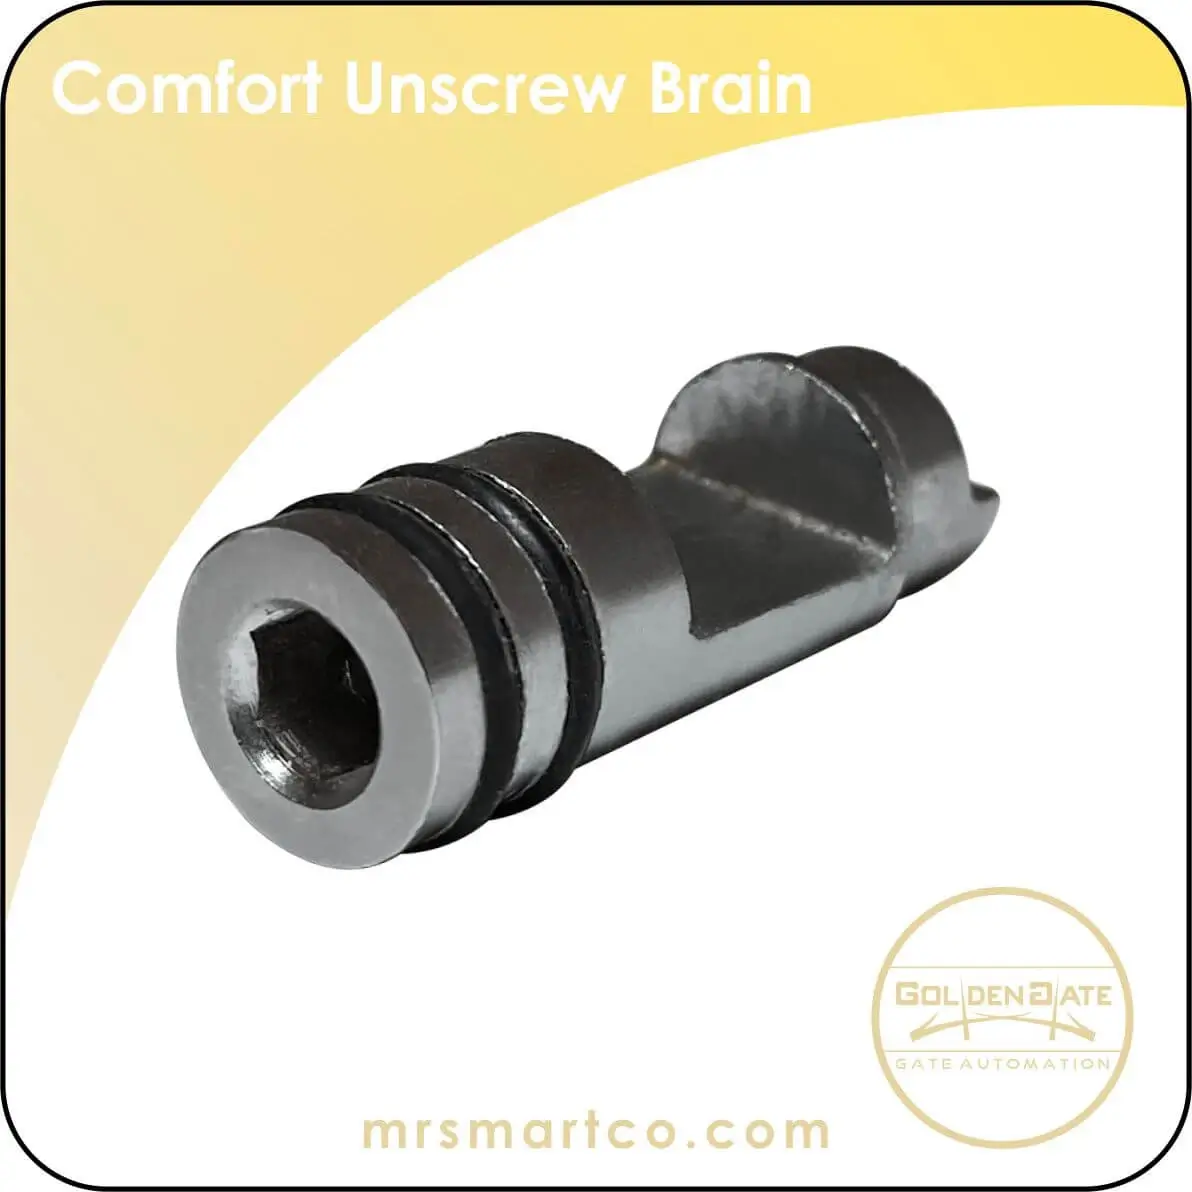 Comfort Unscrew Brain